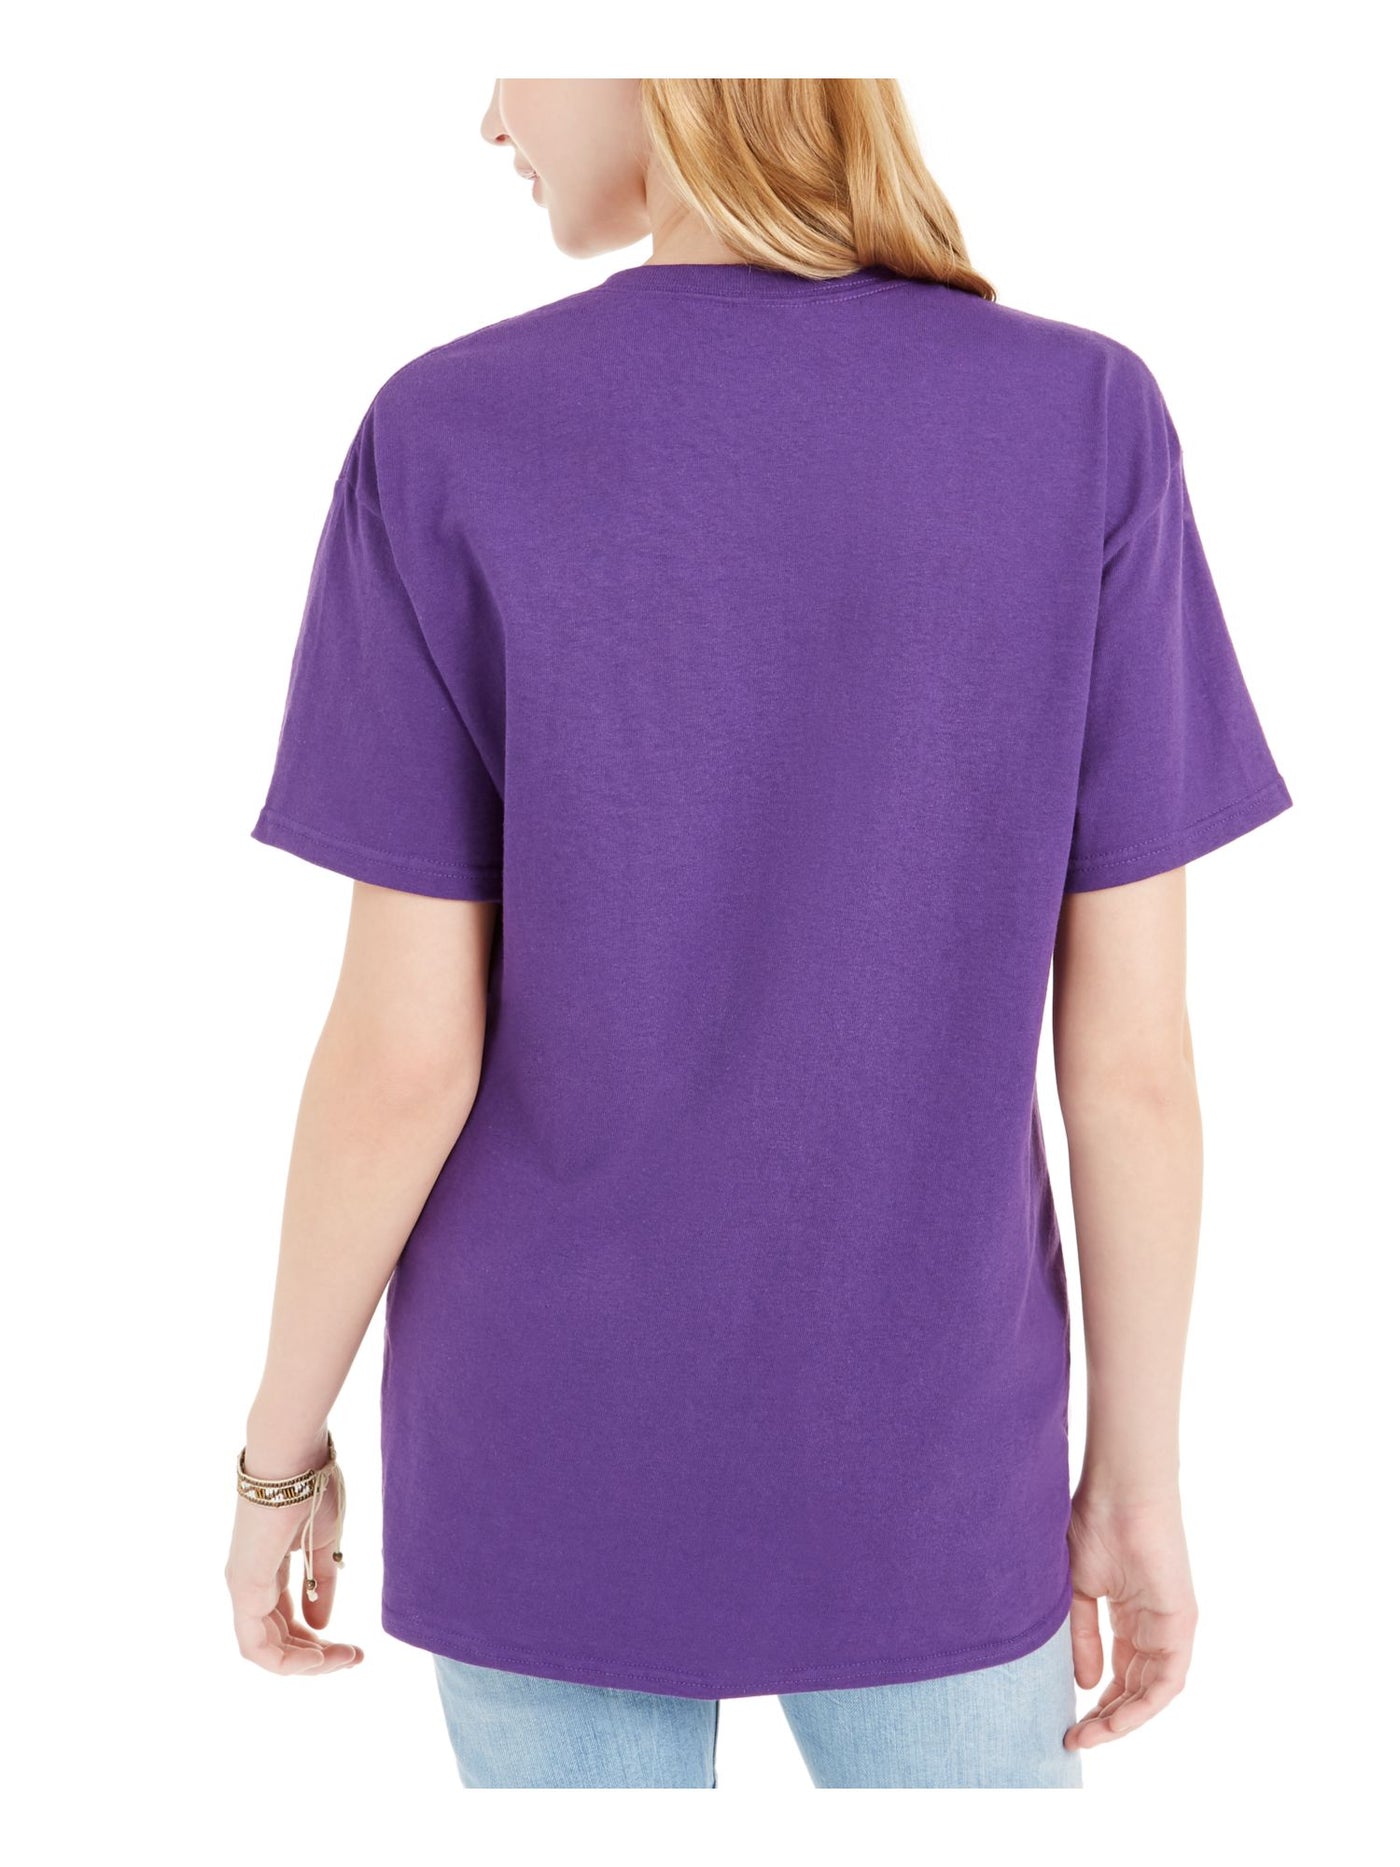 FREEZE Womens Purple Printed Short Sleeve Crew Neck T-Shirt Juniors XL